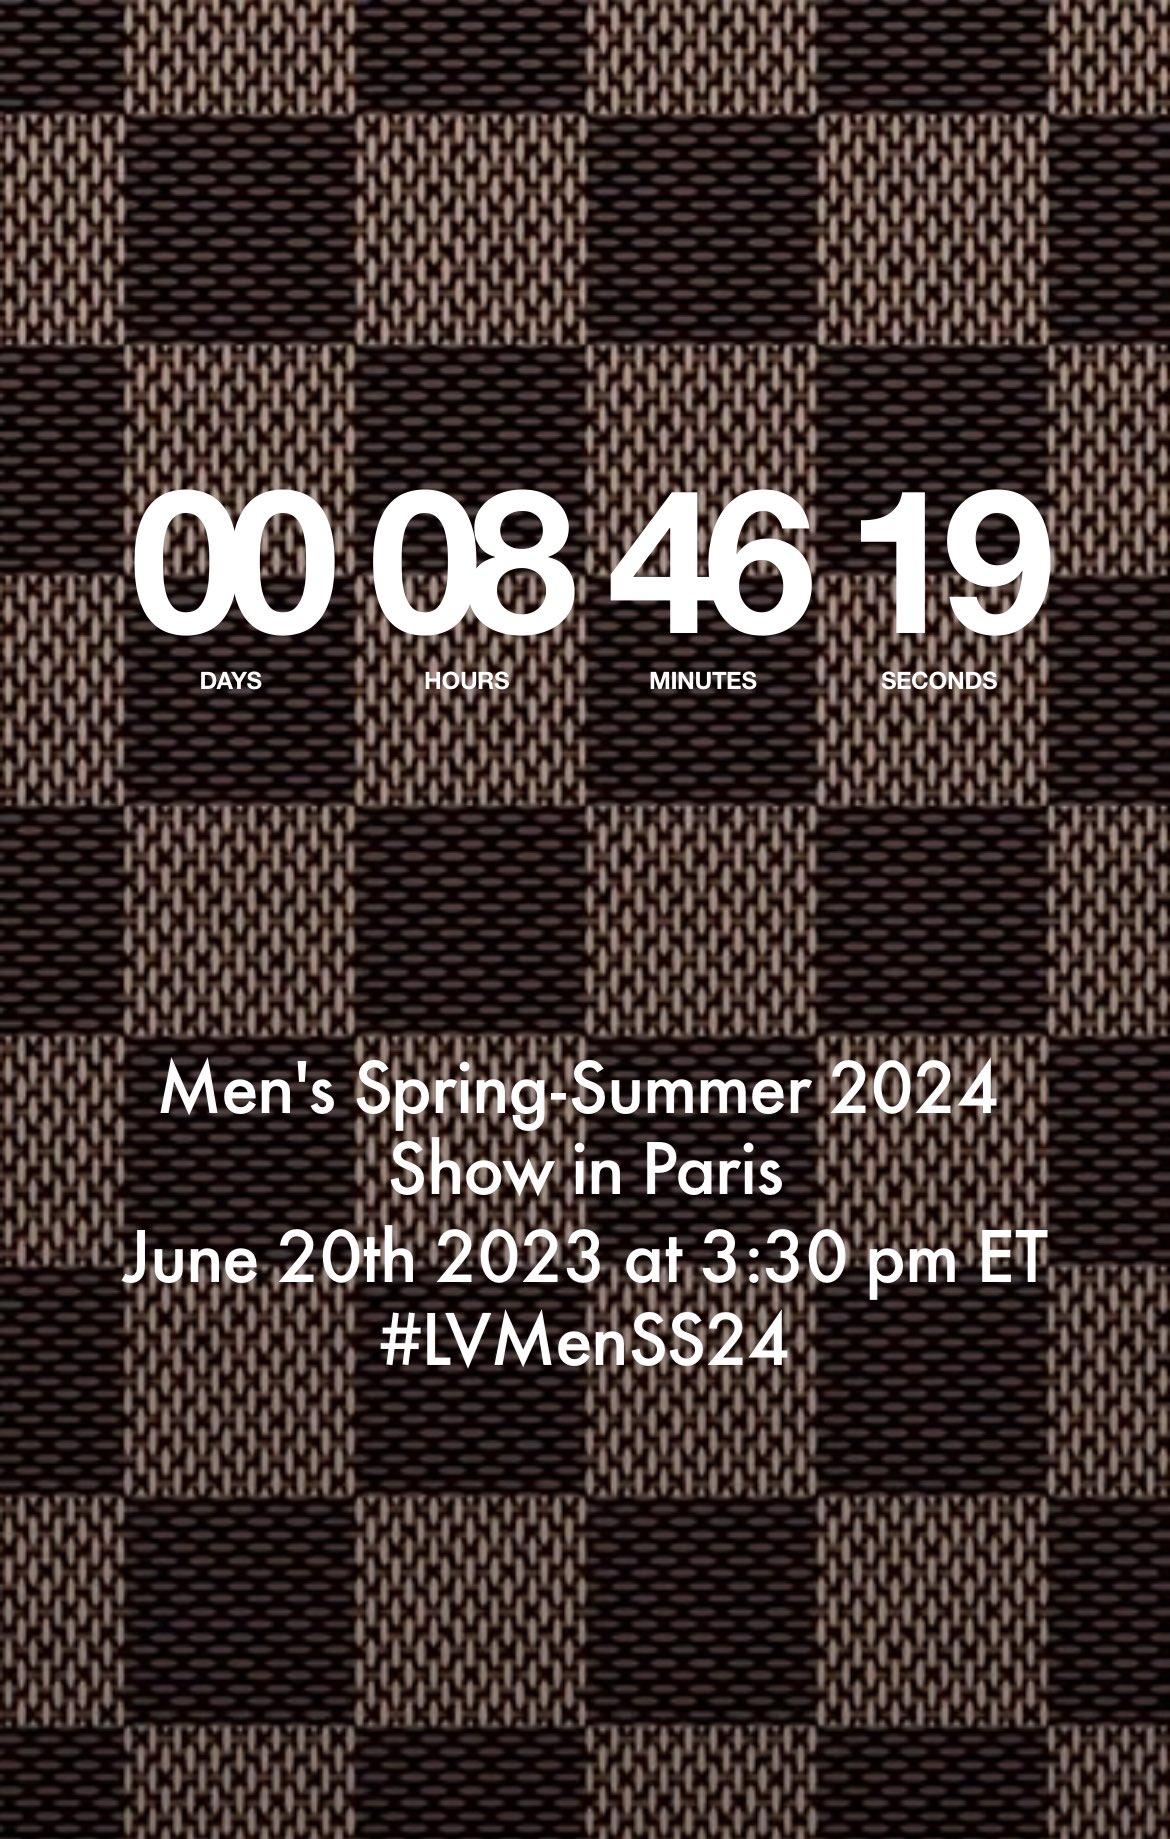 𝙏𝙚𝙖𝙢 𝘽𝙖𝙢𝘽𝙖𝙢 𝙎𝙥𝙖𝙘𝙚 on X: BamBam will attend Louis Vuitton  Men's Spring-Summer 2024 Fashion